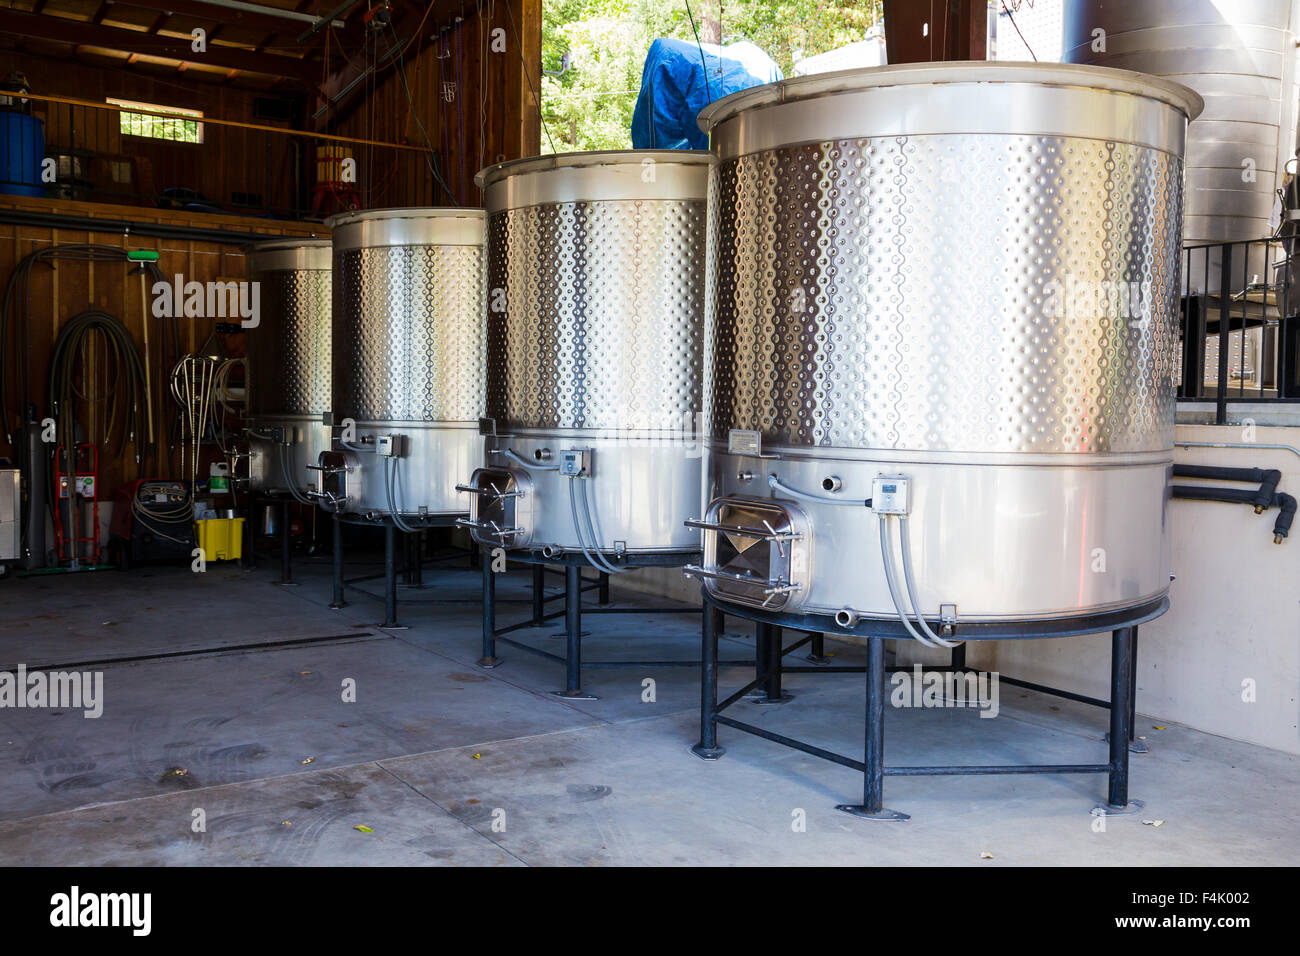 Stainless steel wine tanks at the Wooldridge Creek Vineyard & Winery located in Southern Oregon. Stock Photo